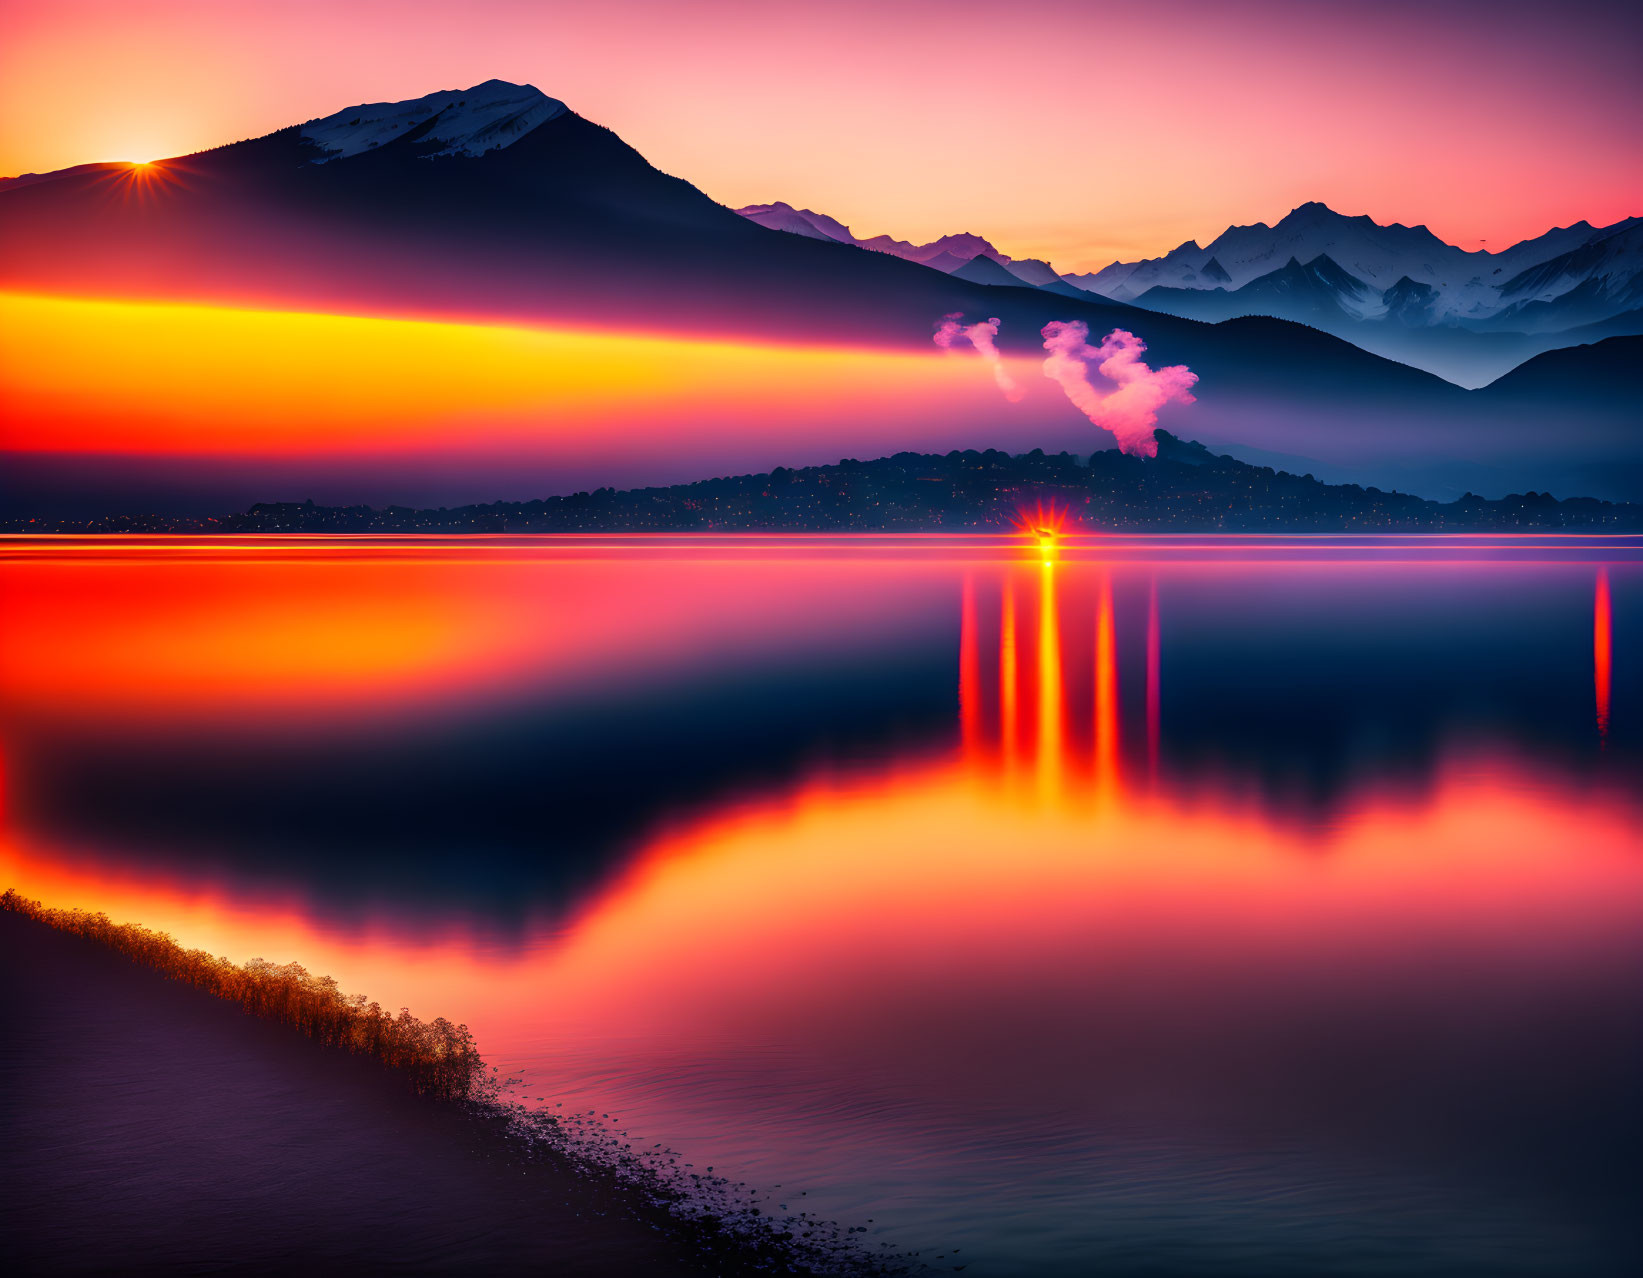 Scenic sunrise over calm lake with mountain silhouettes